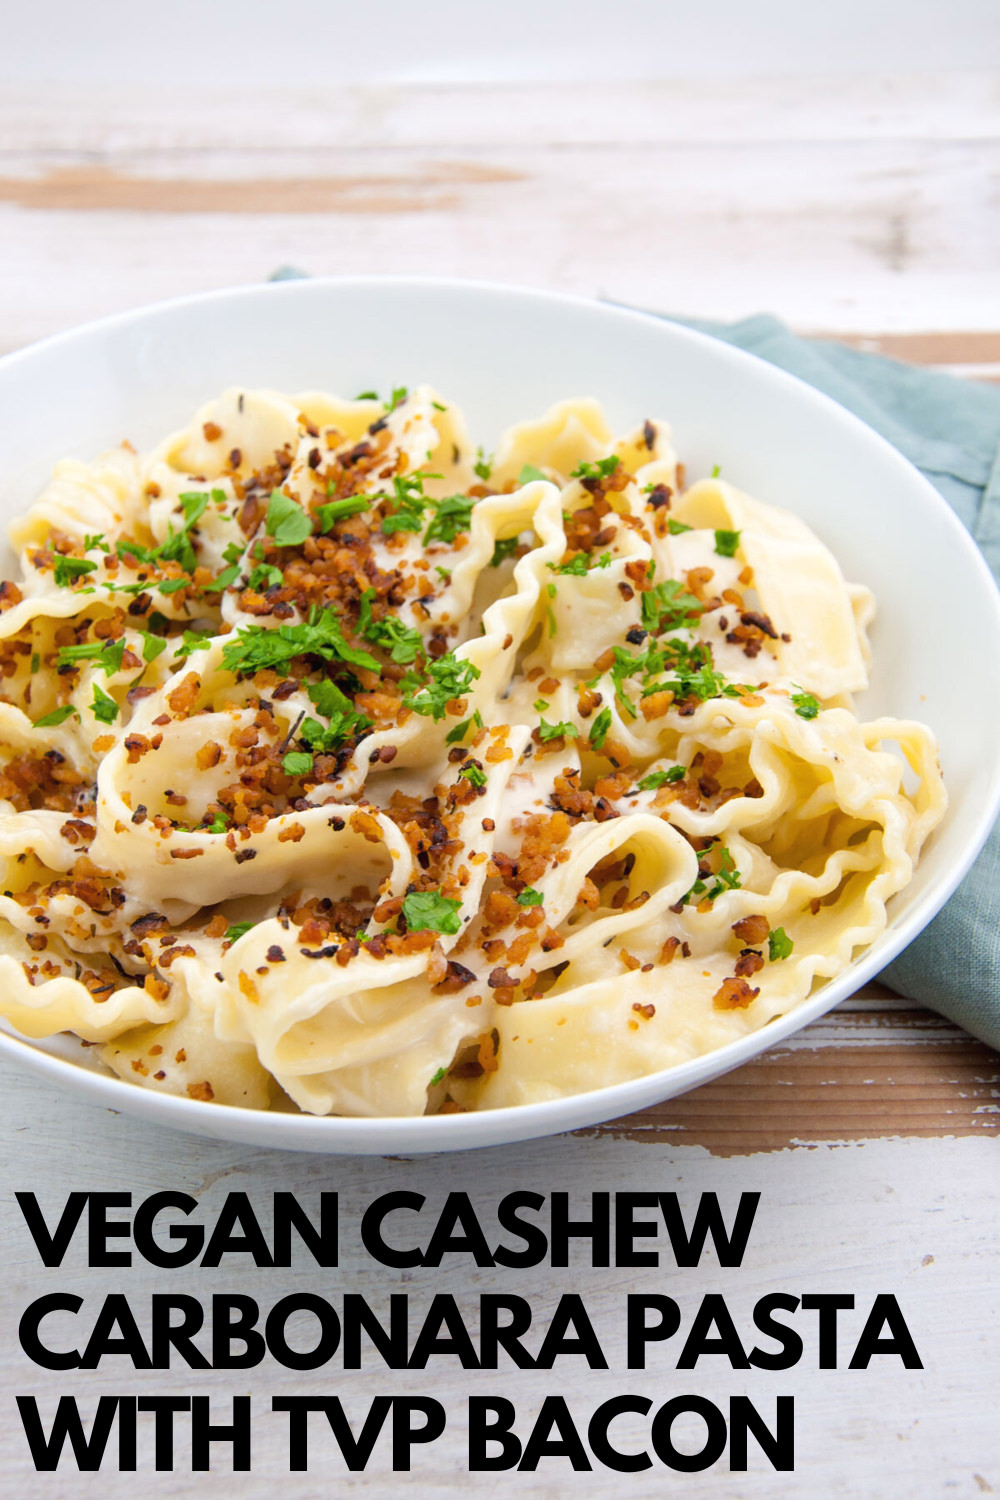 Vegan Cashew Carbonara Pasta with TVP Bacon